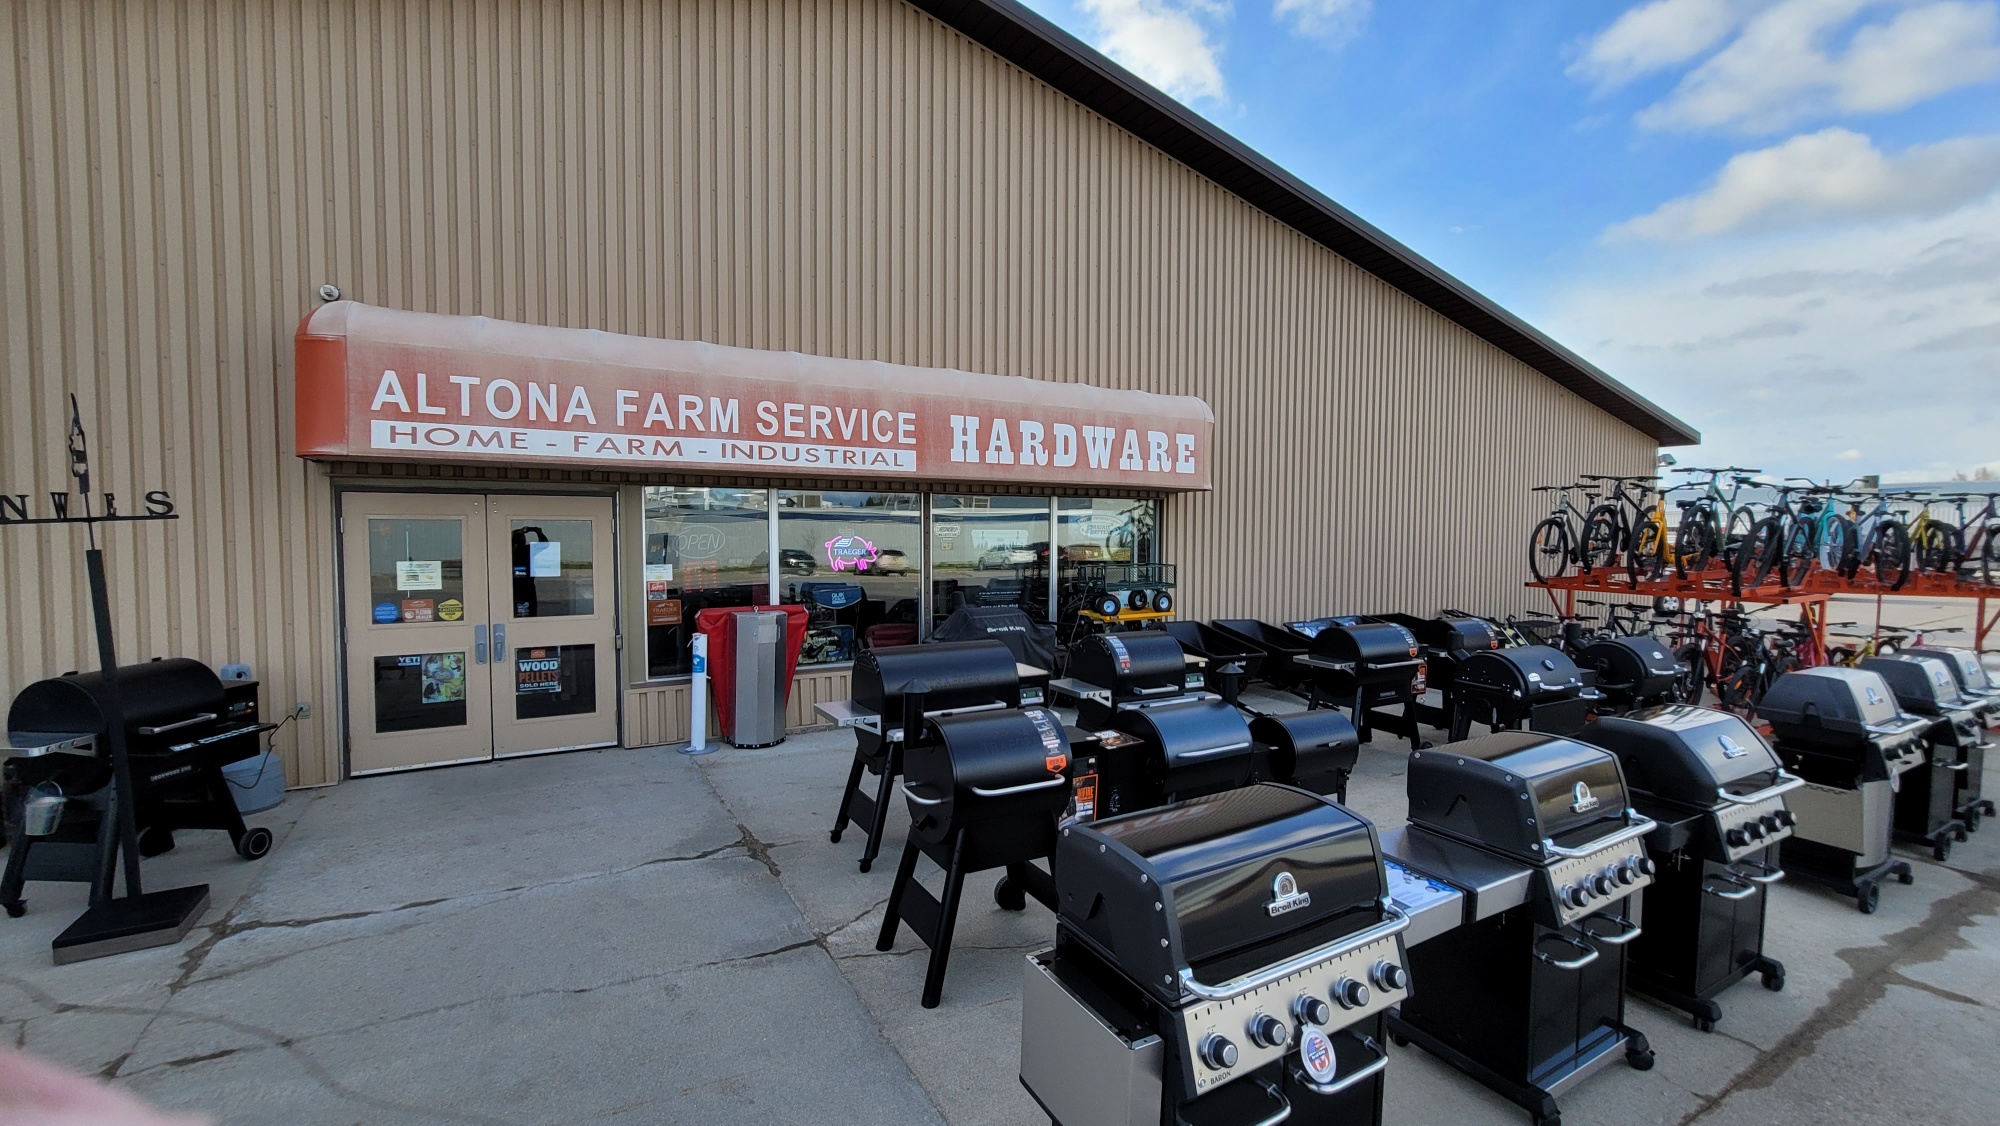 Altona Farm Service Ltd. - Harvest Red Coolers now available in the Tundra  45 and 65 #yeti #afs #altonafarmservice